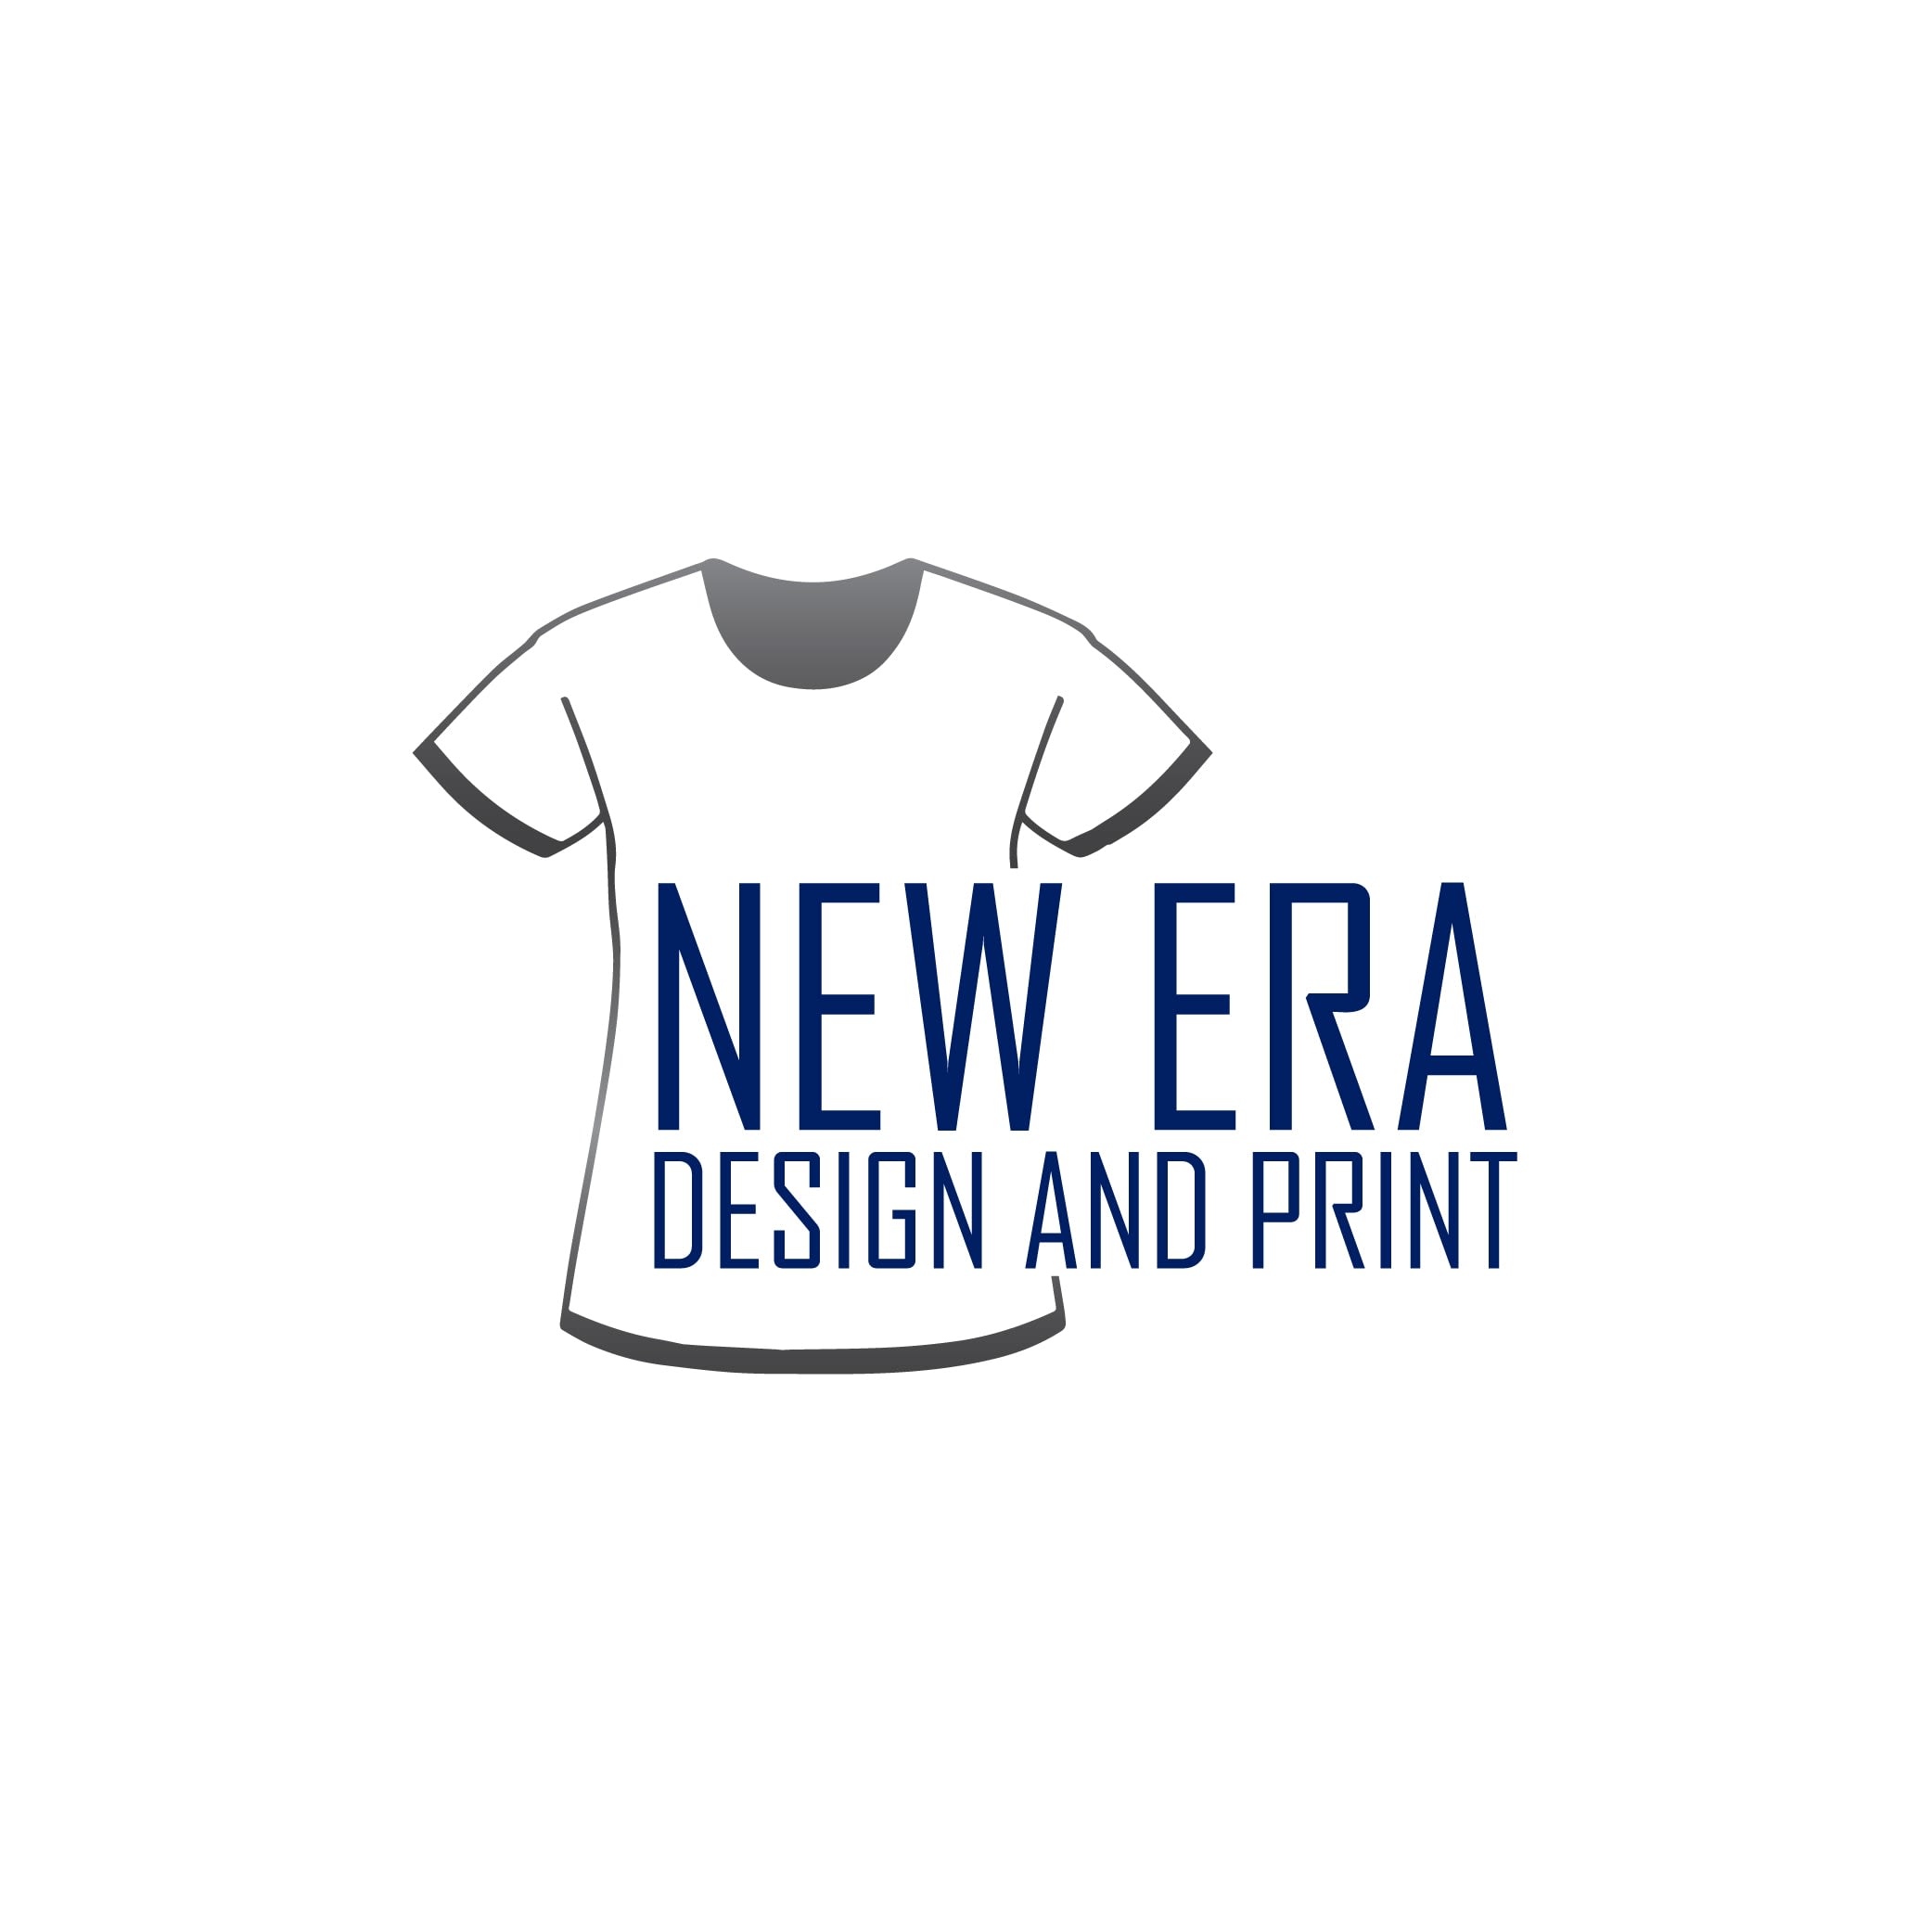 New Era Design And Print